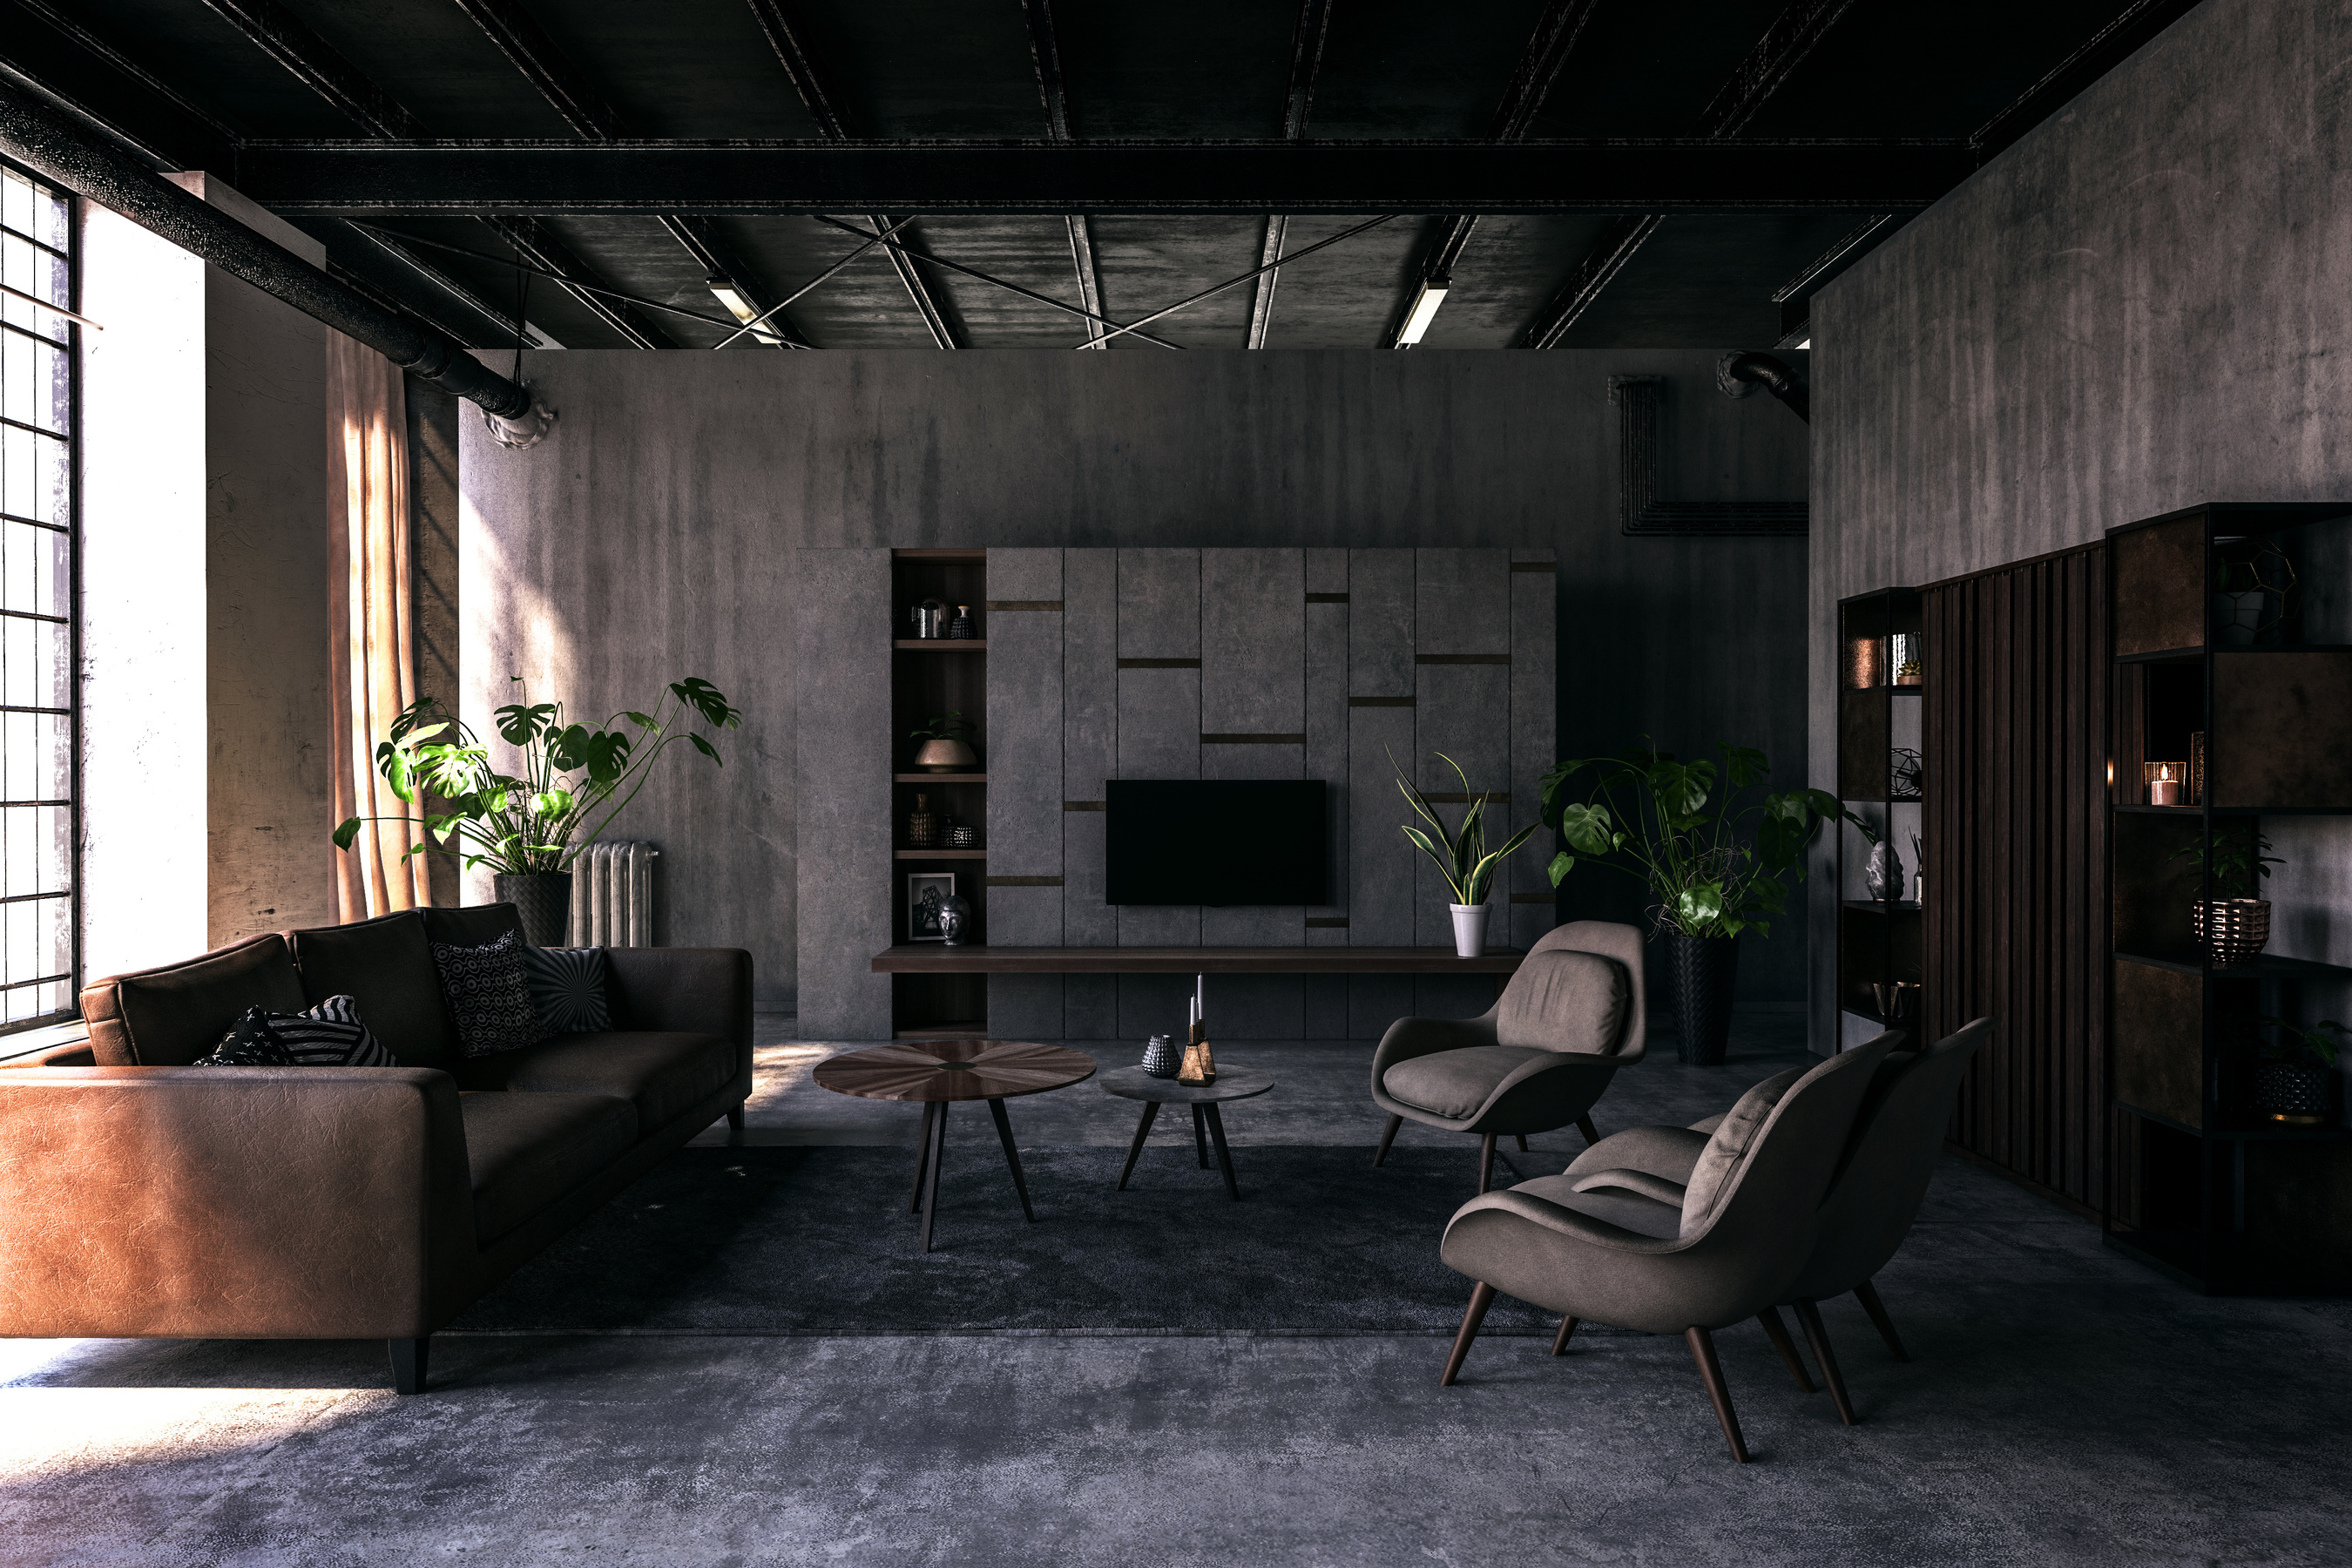 Spacious Living Room with Dark Interior